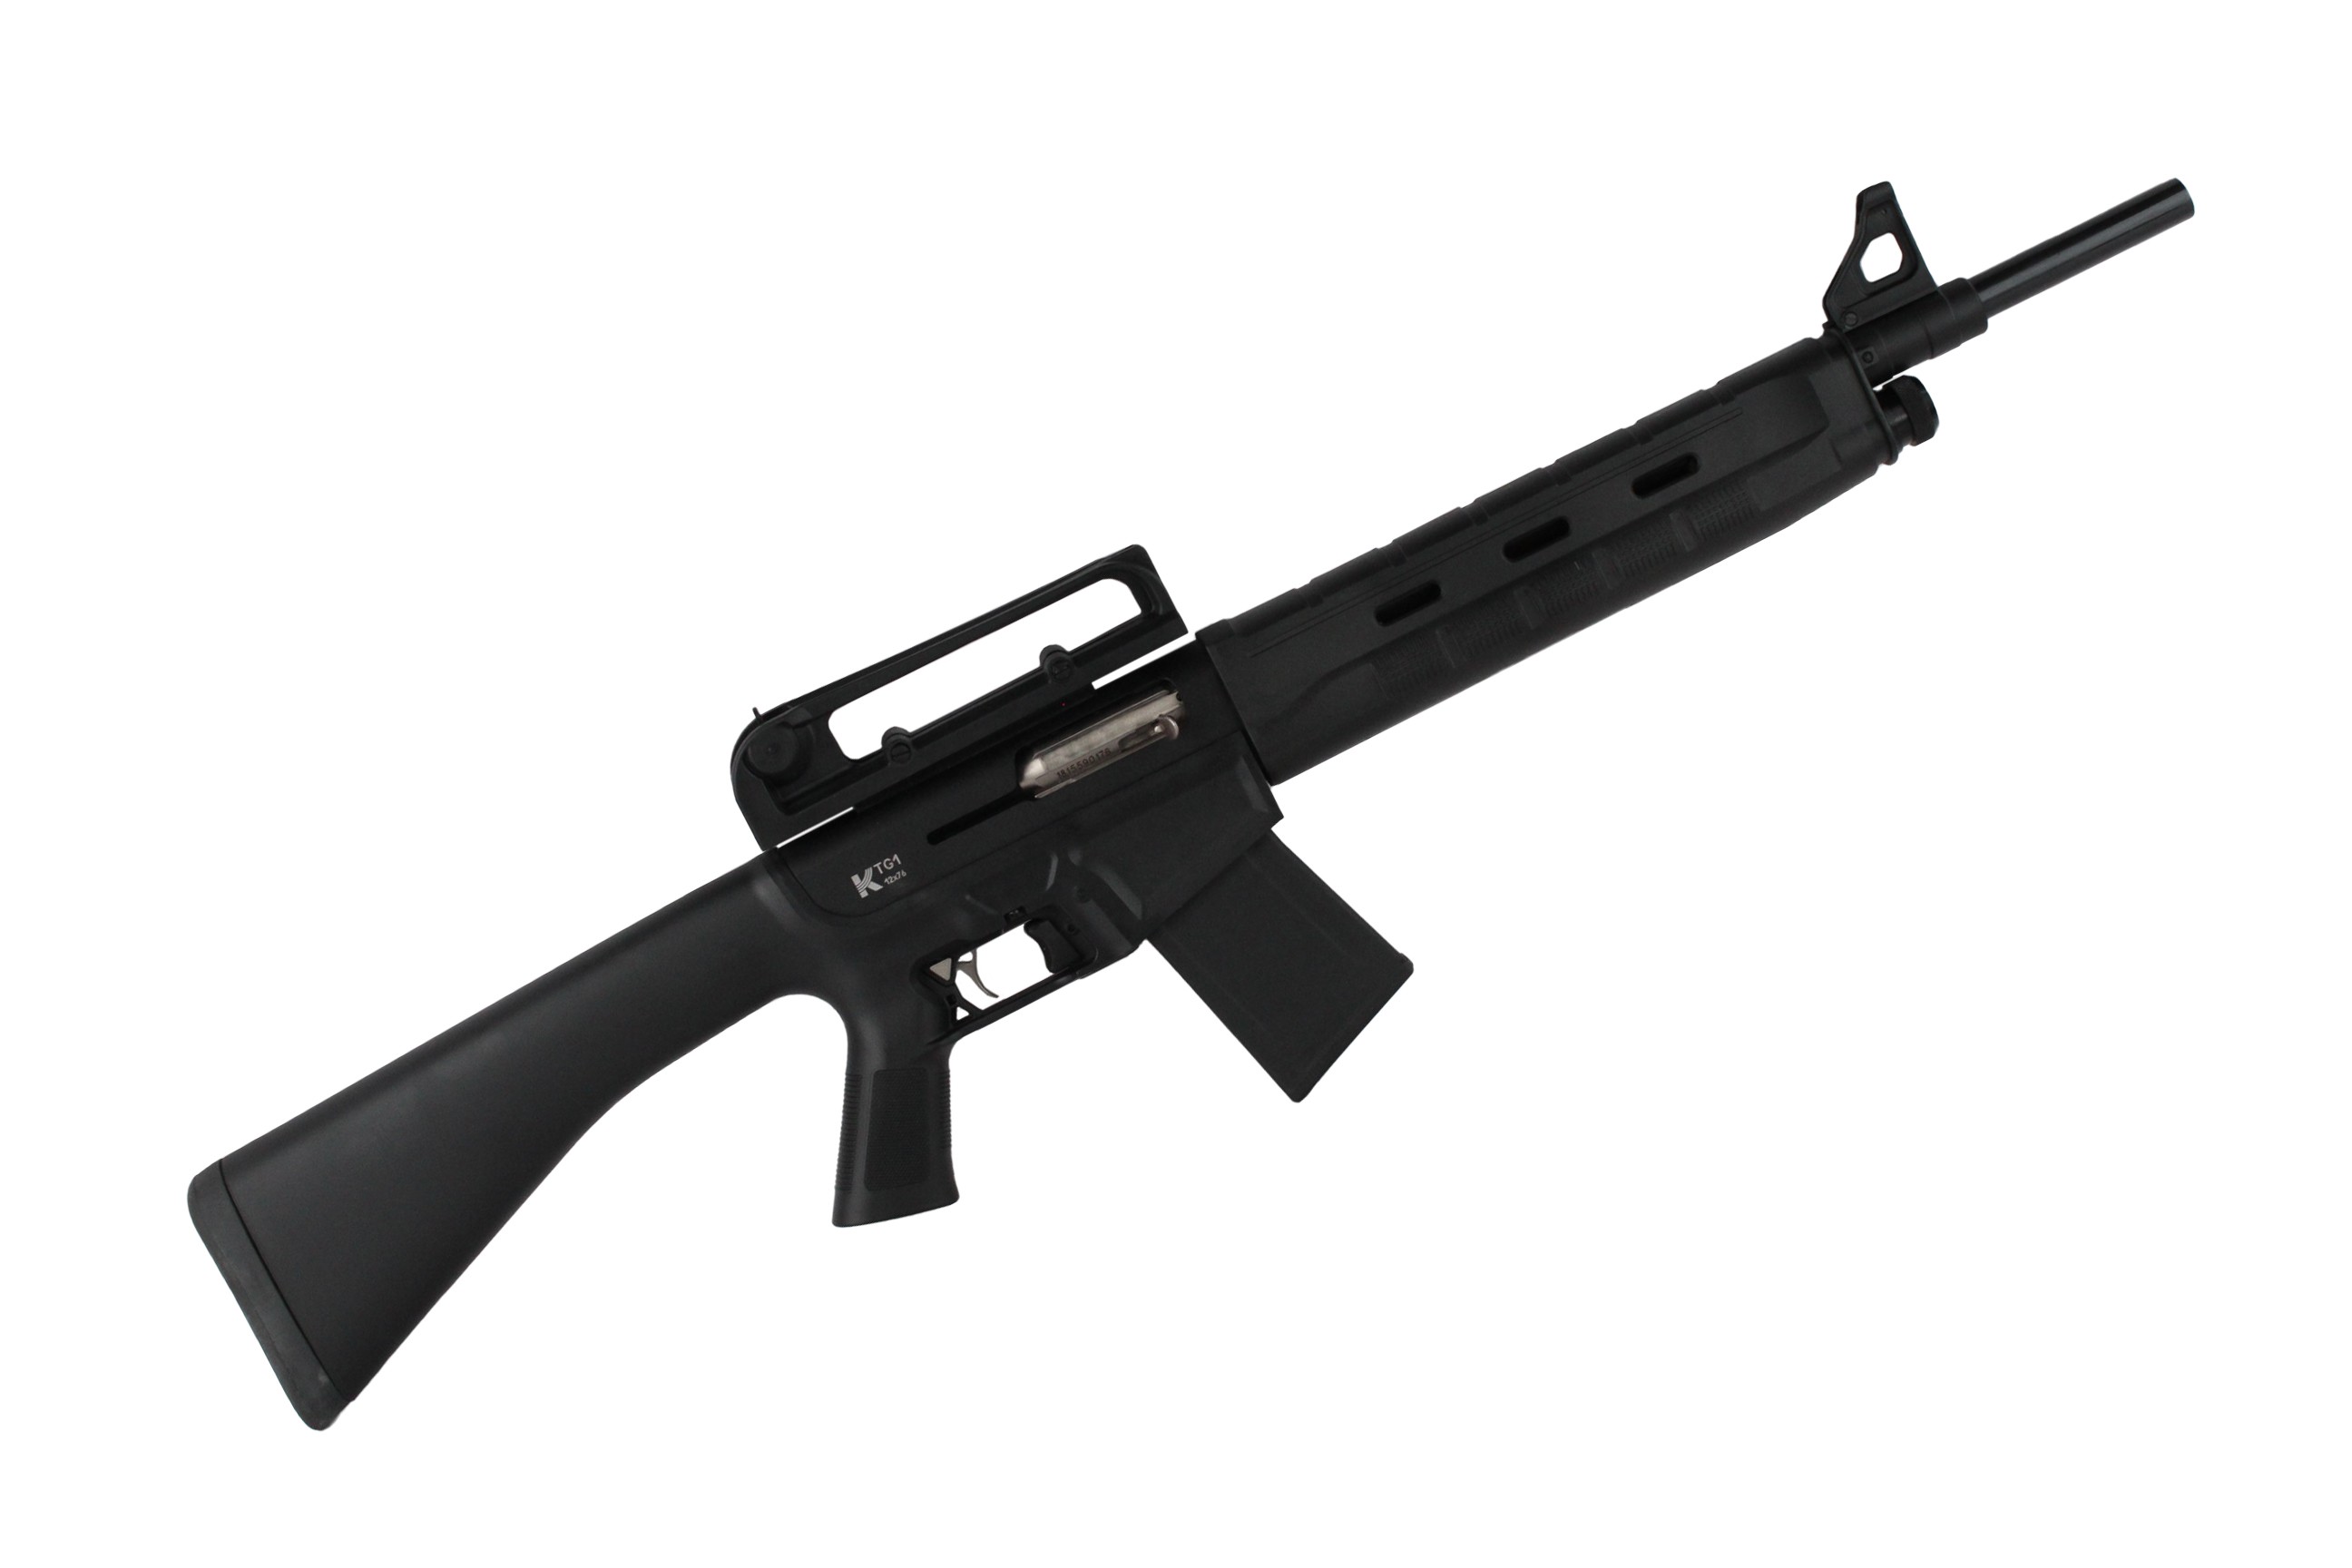 Ружье КК Kalashnikov TG1 12x76 510мм